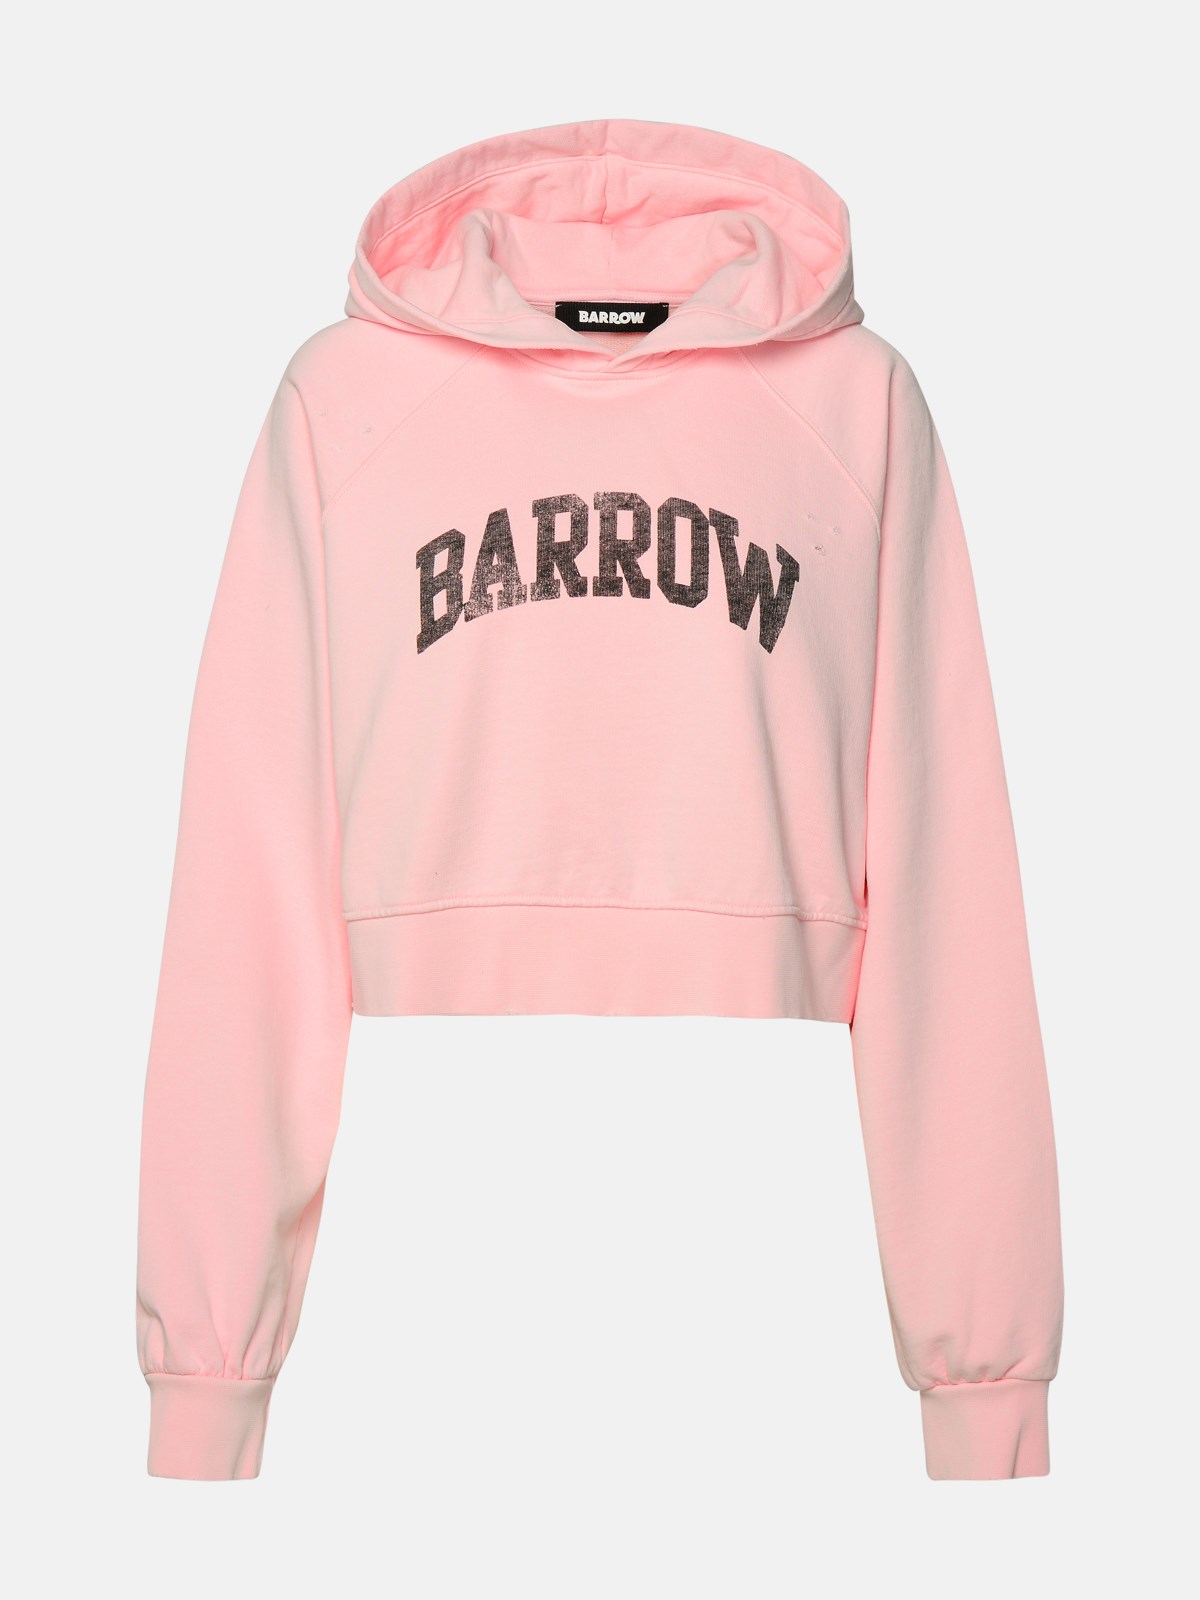 Shop Barrow Pink Cotton Sweatshirt